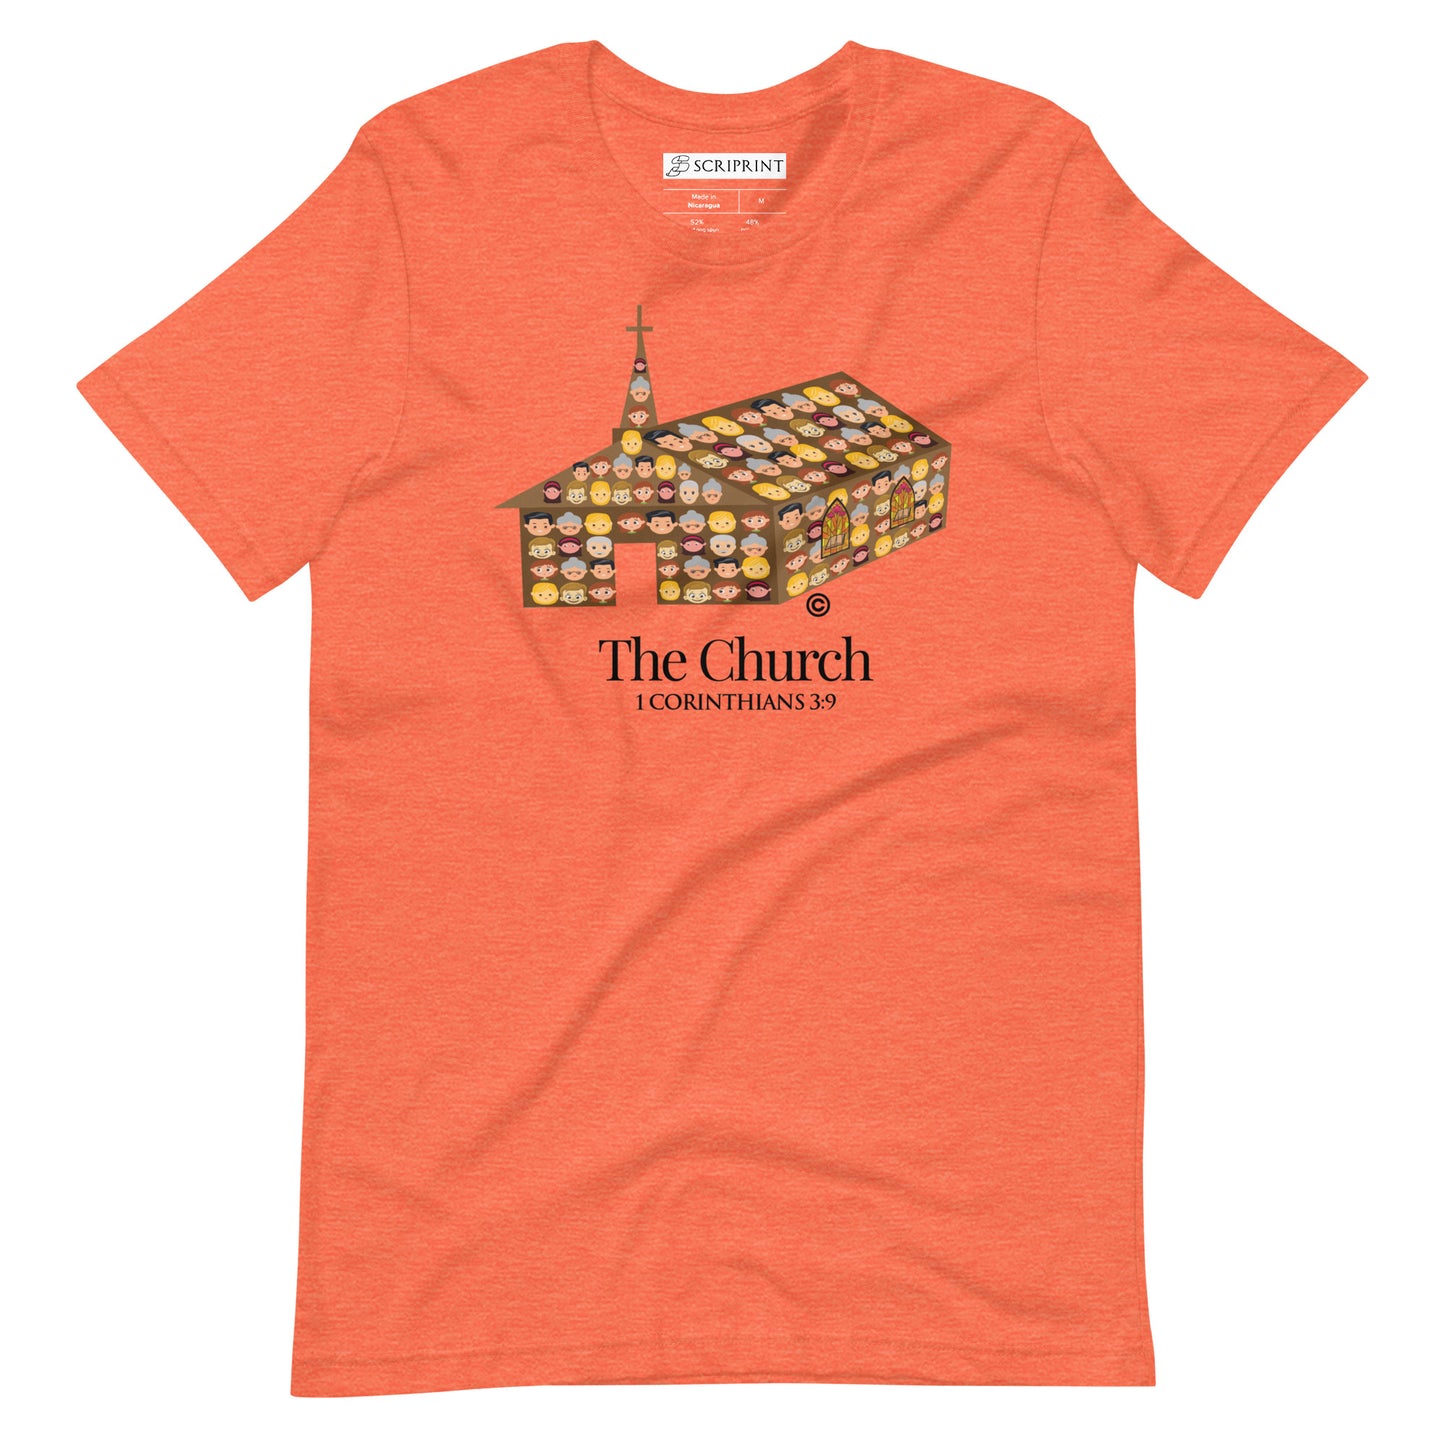 The Church Men's T-Shirt